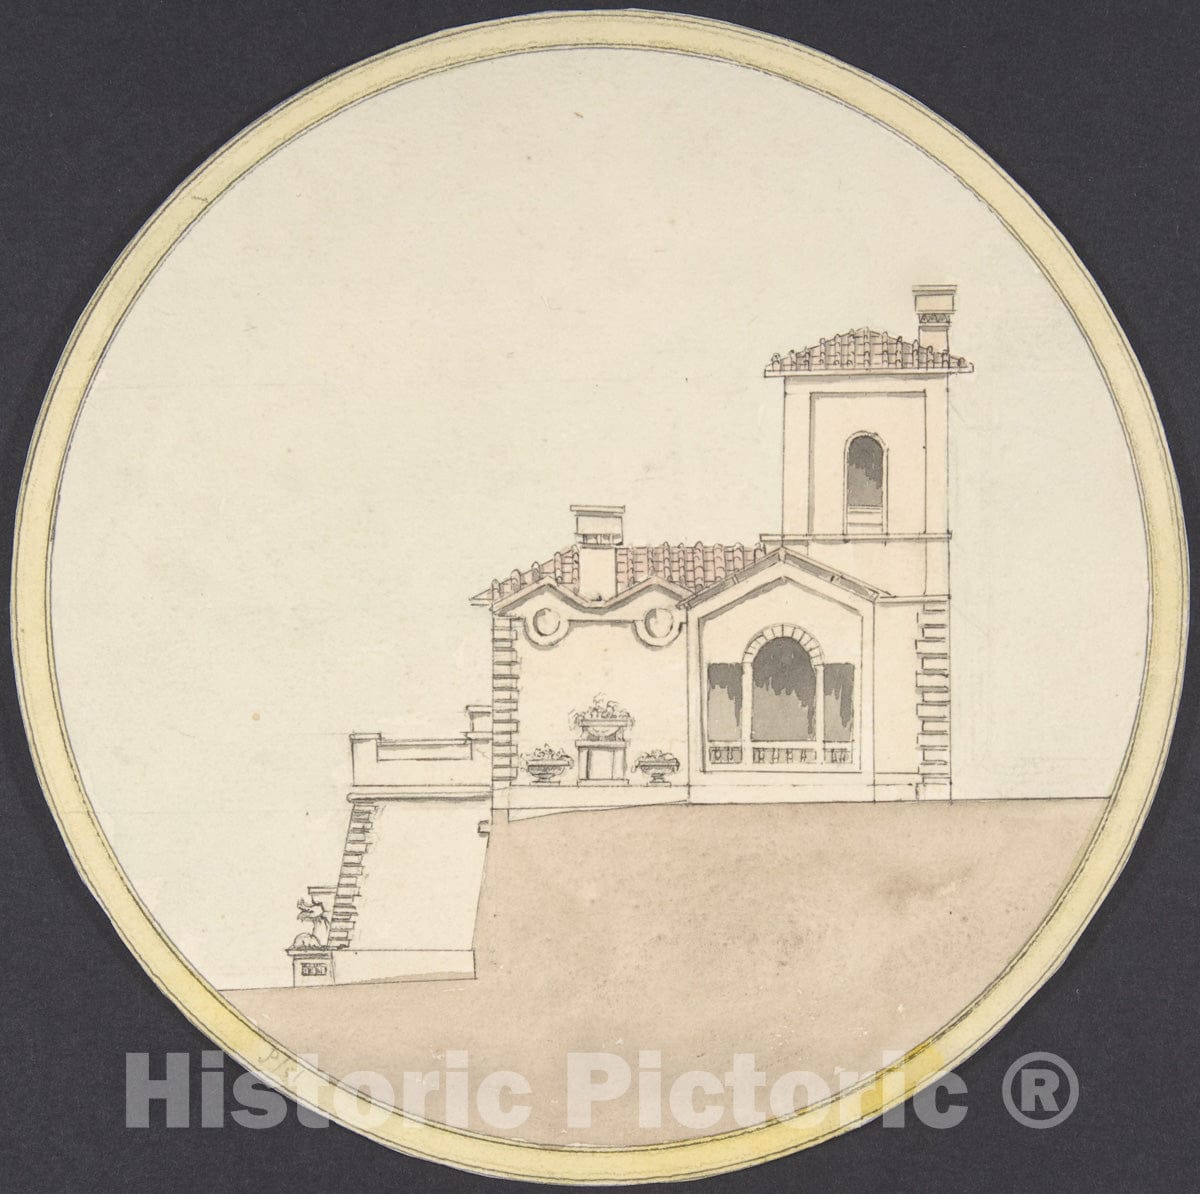 Art Print : British, 19th Century - Side Elevation of an Italian Villa Style House : Vintage Wall Art